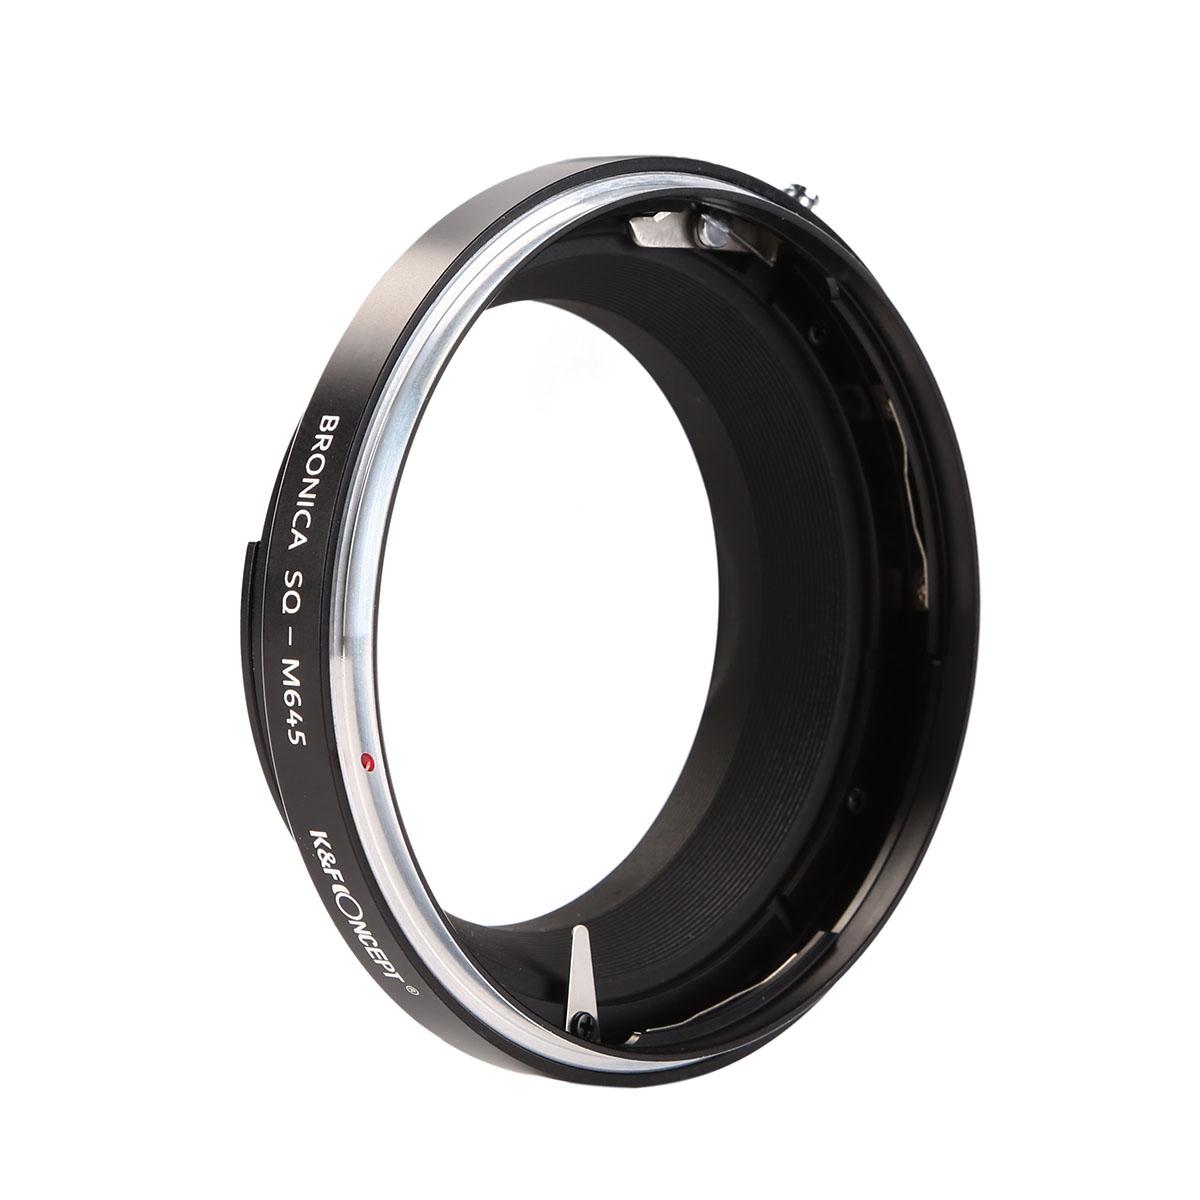 Bronica SQ レンズ - Mamiya 645 マウント カメラ ボディ K&F Concept